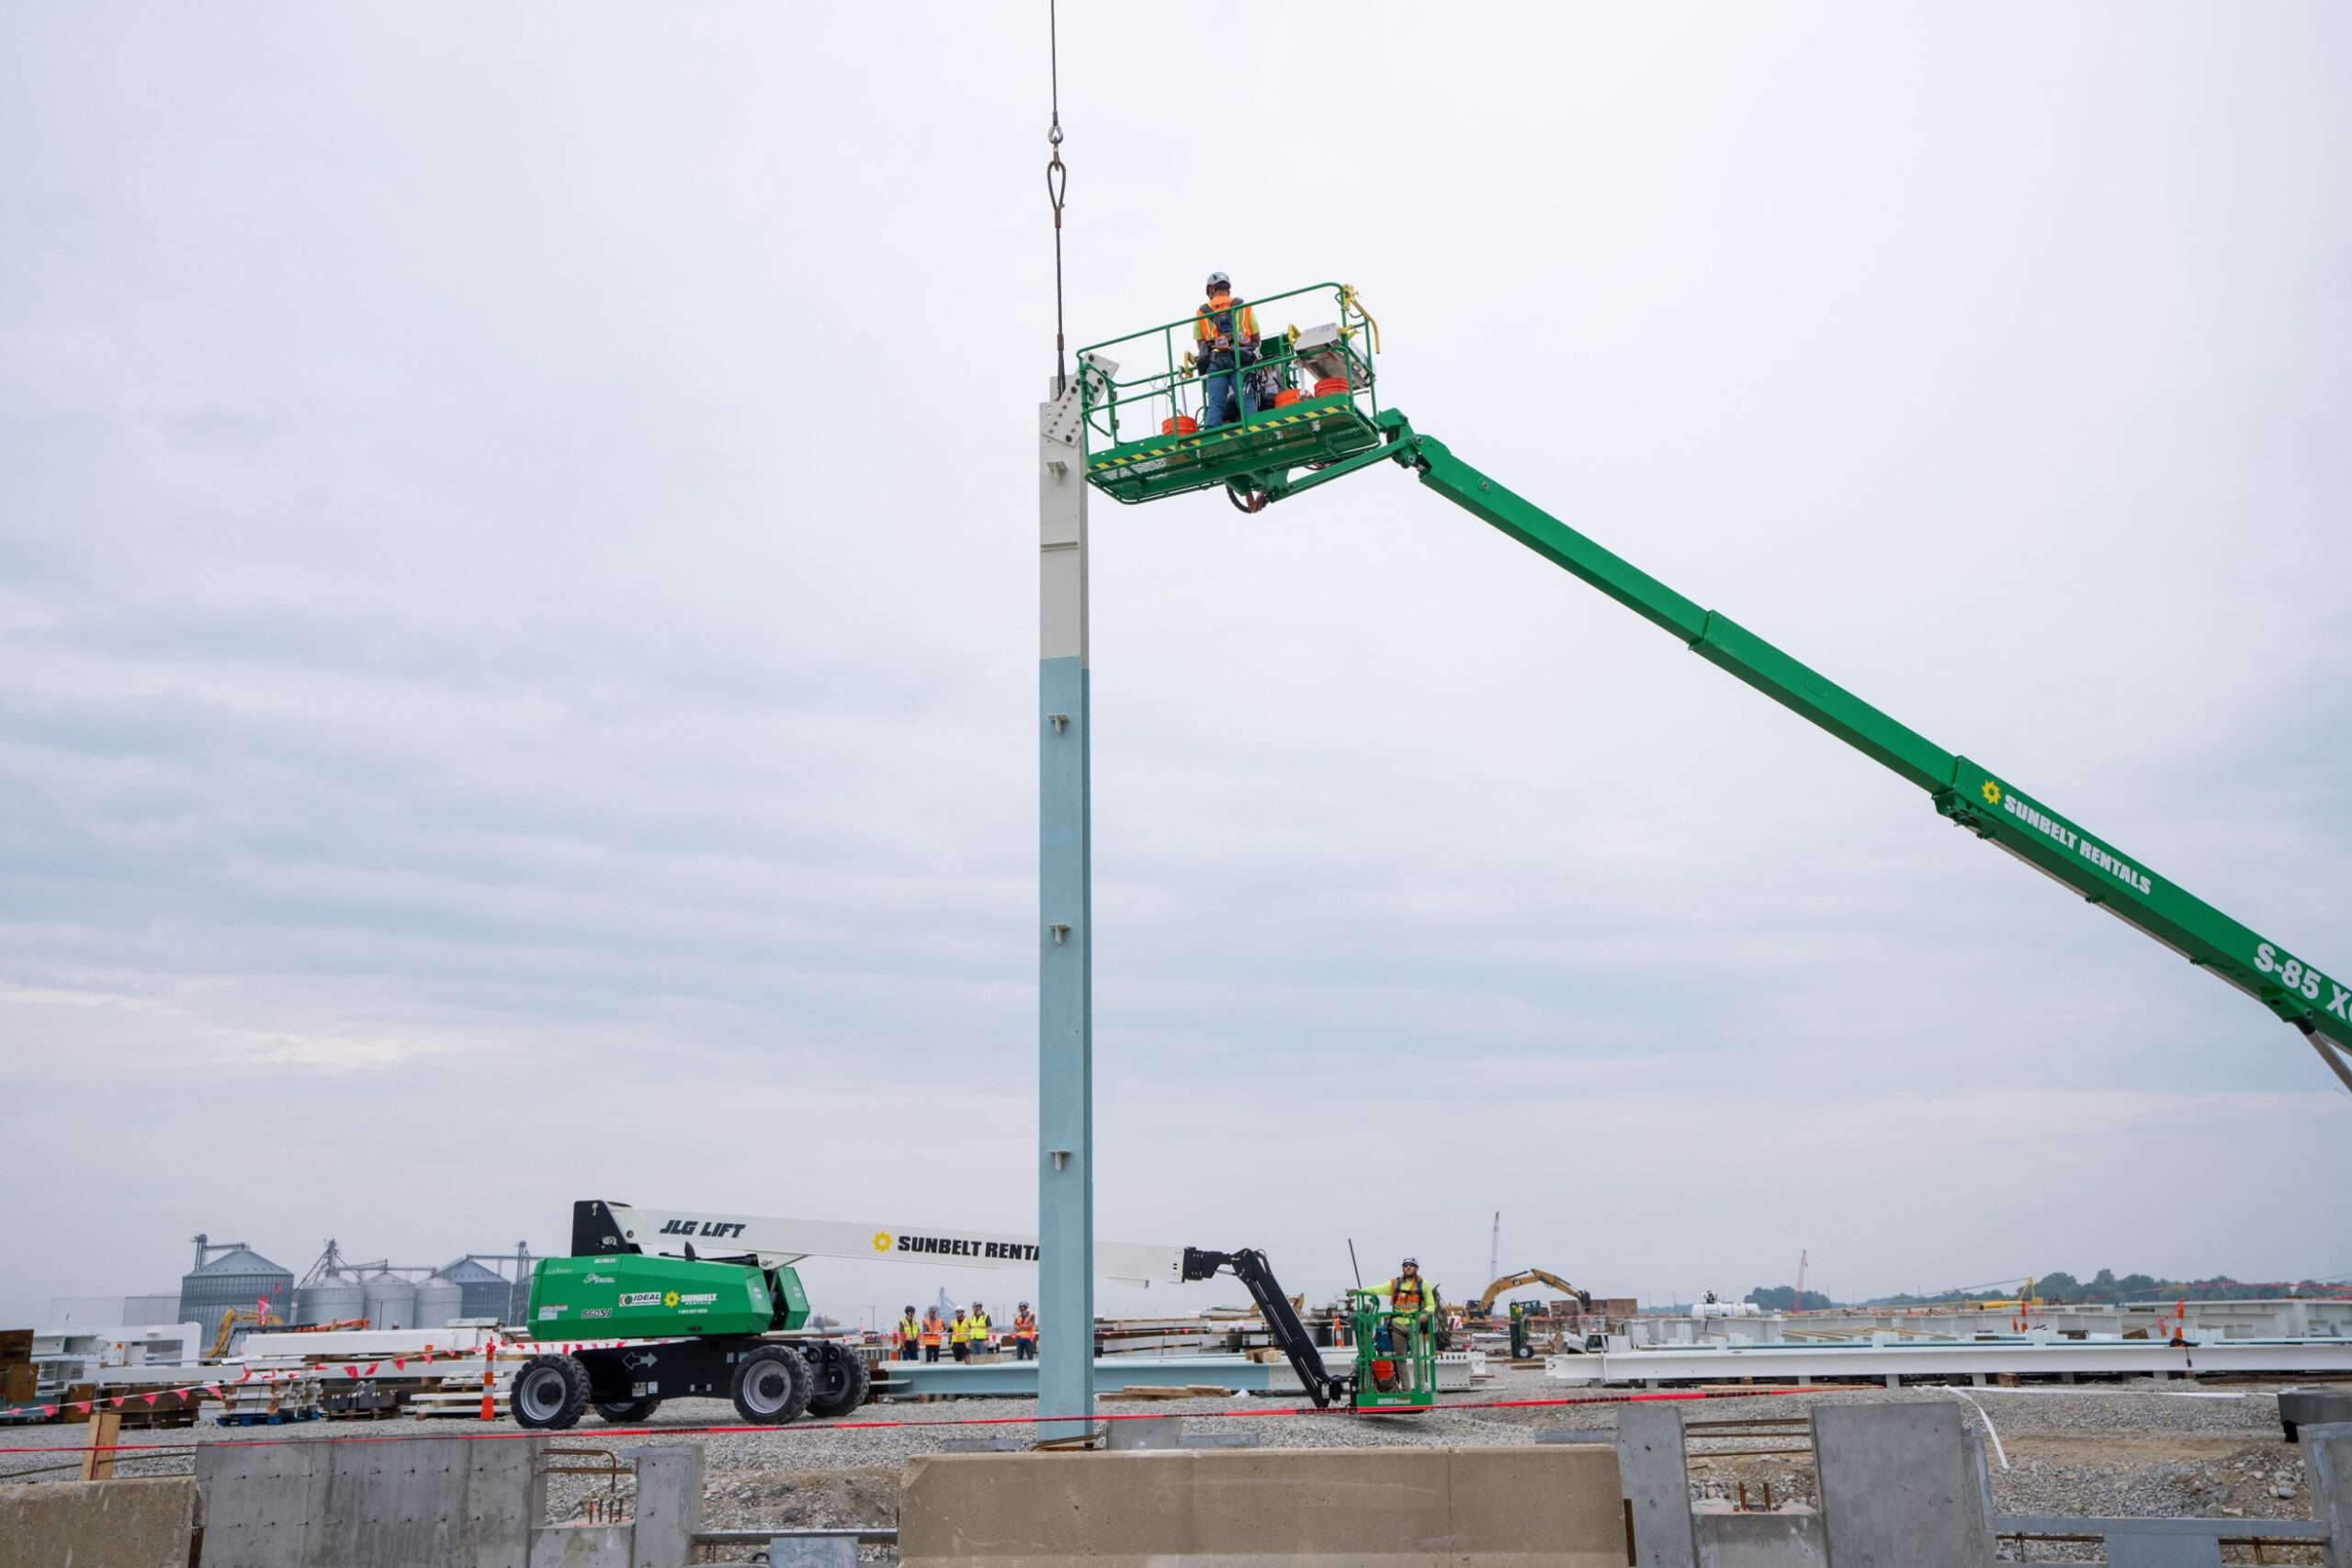 lges-honda-battery-plant-in-ohio-reaches-another-major-construction-milestone_1.jpg